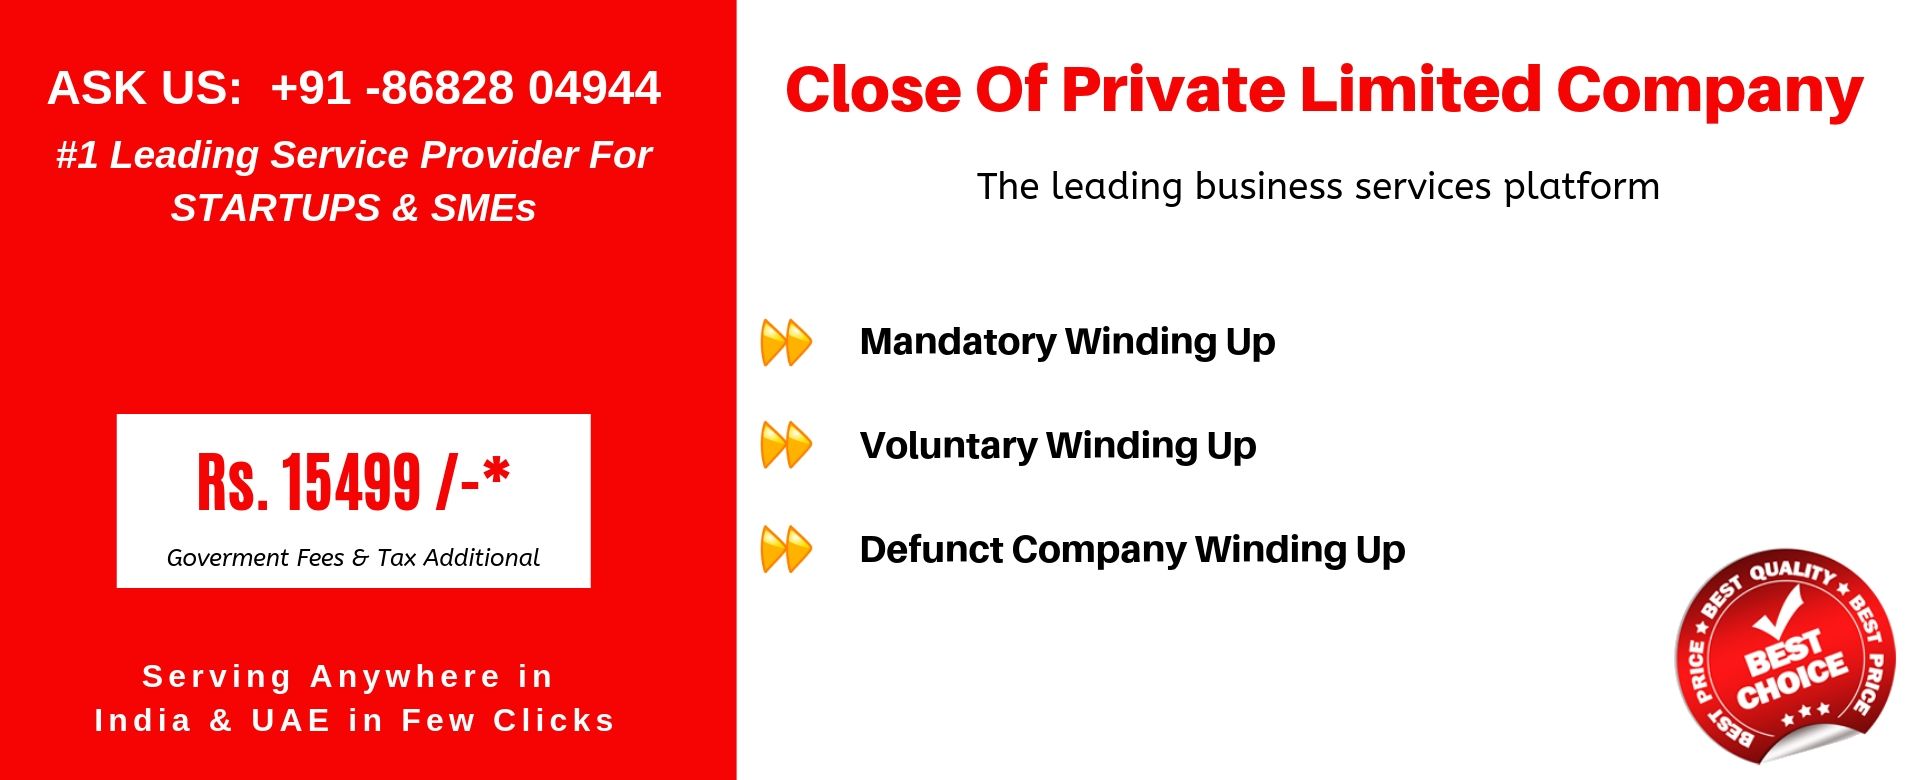 closure of private limited company india